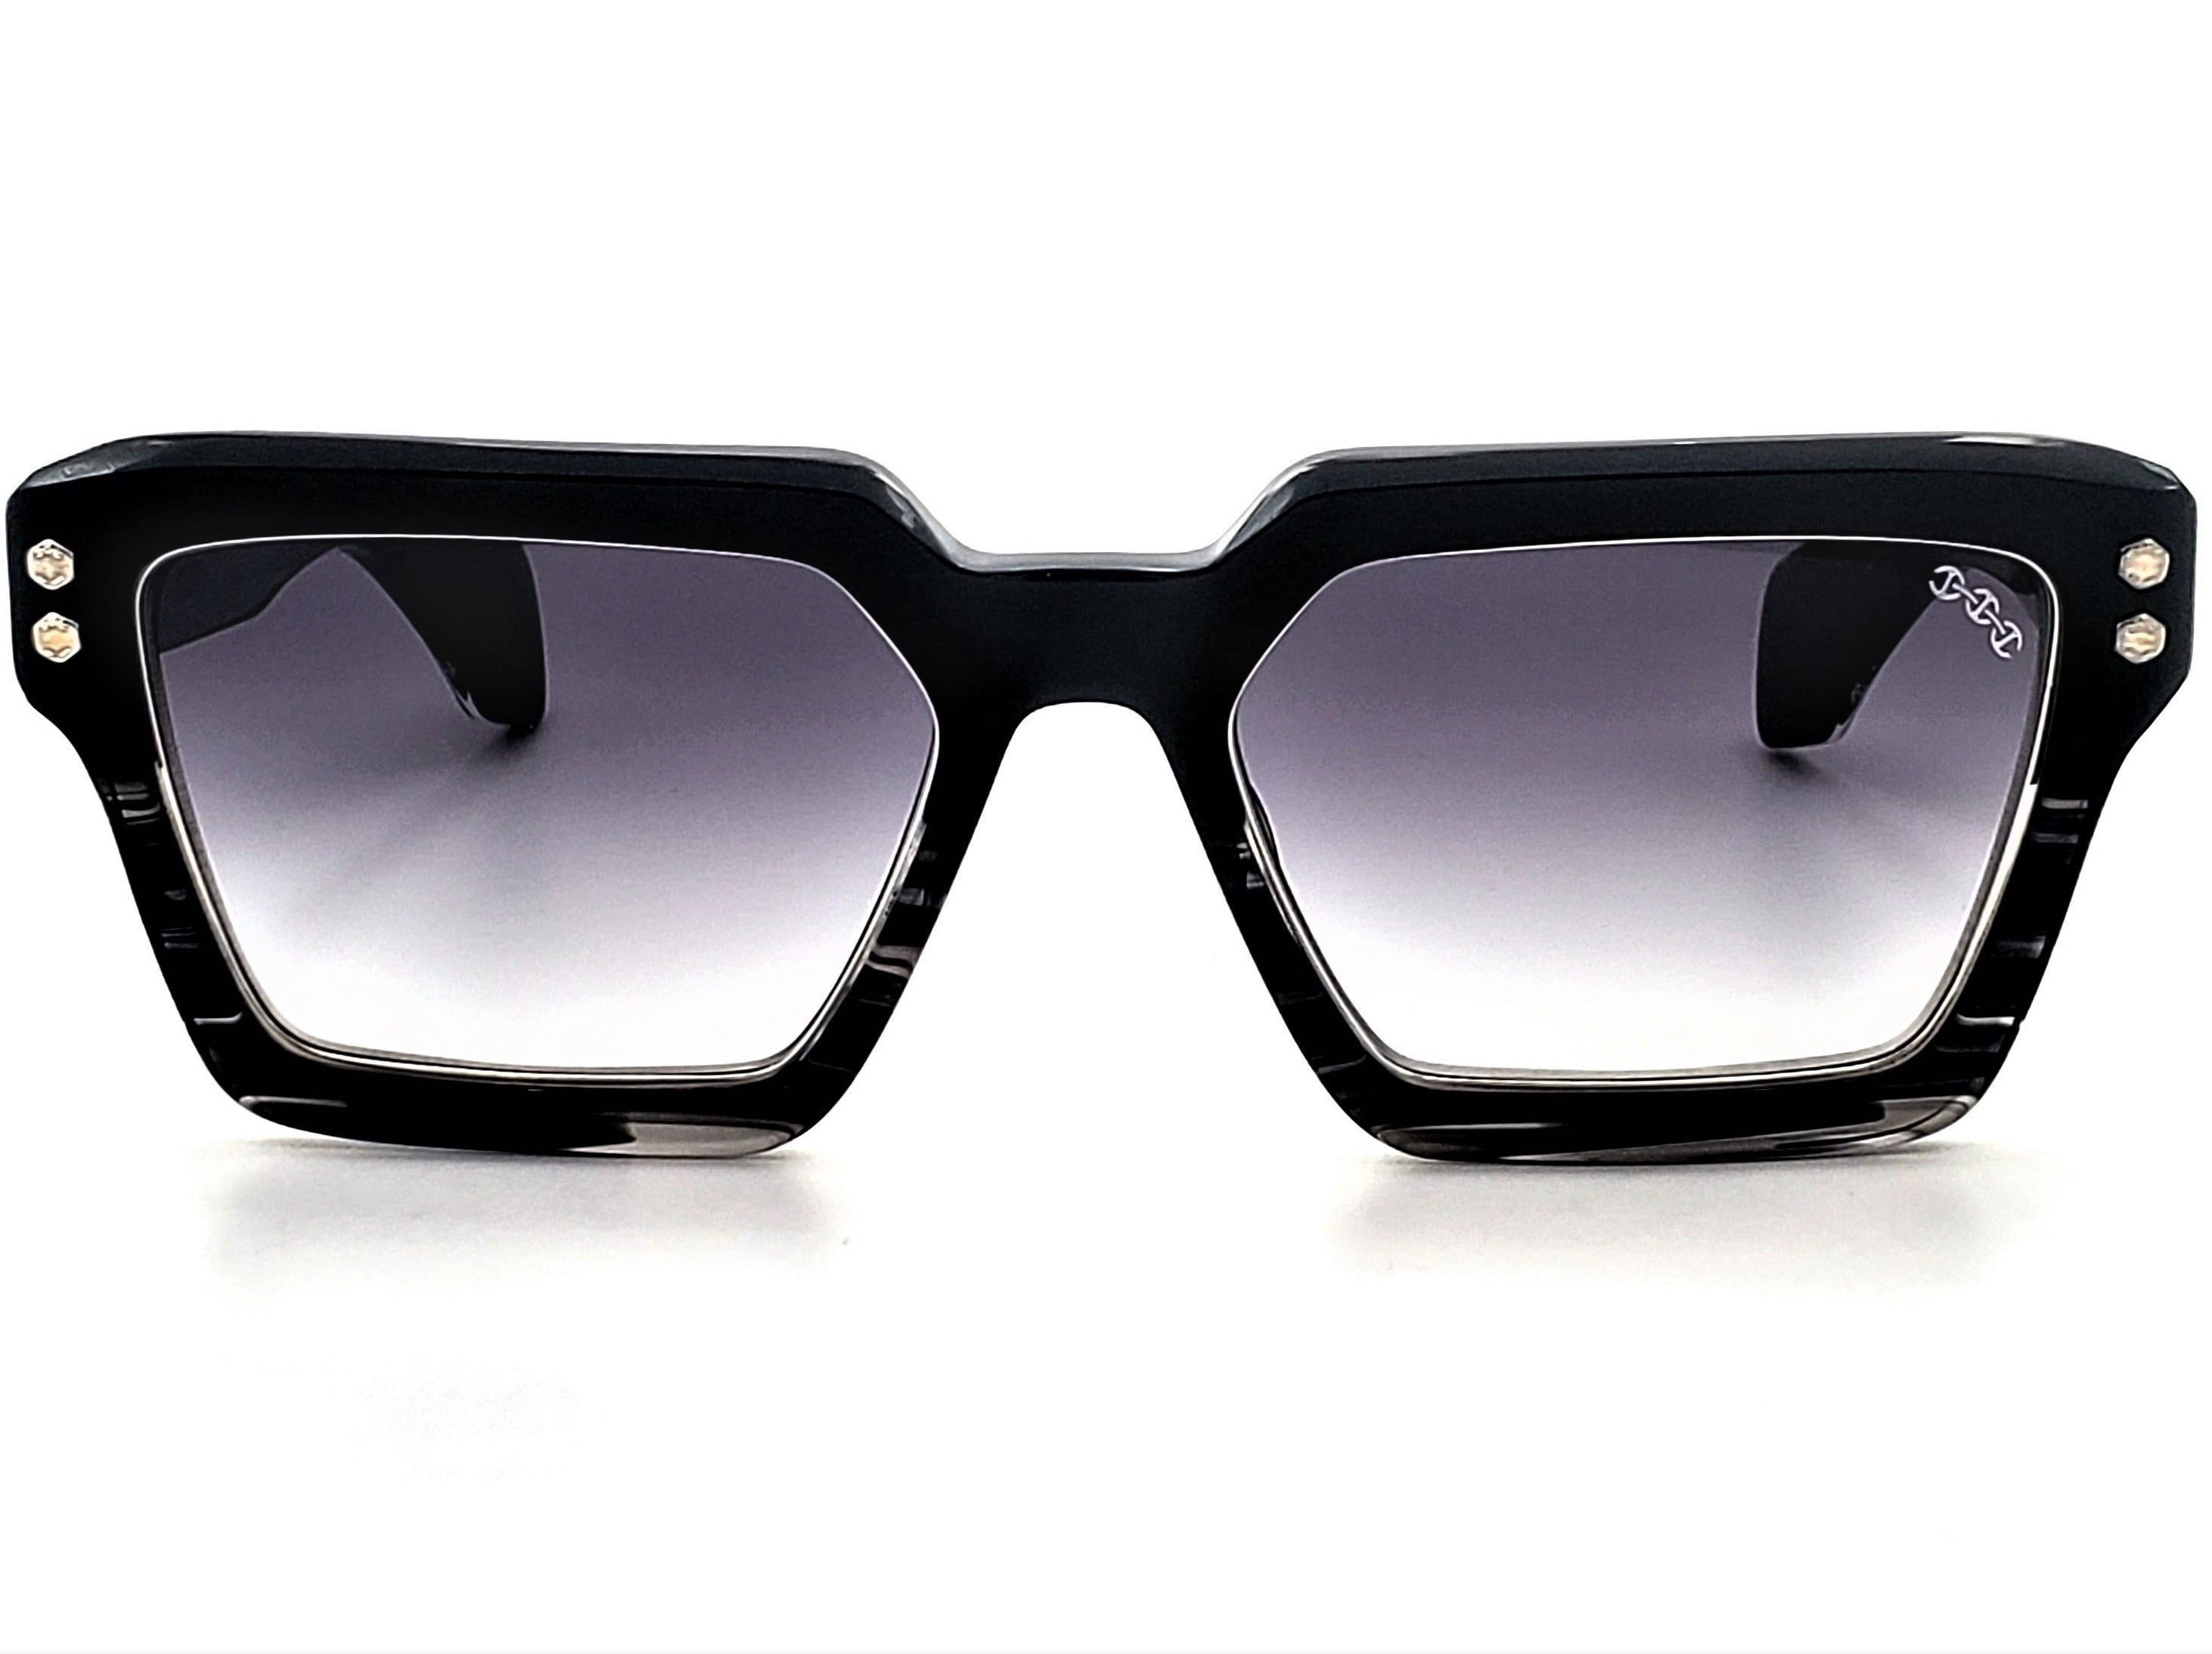 black/grey tortoise fade square sunglasses - hoorsenbuhs model x 